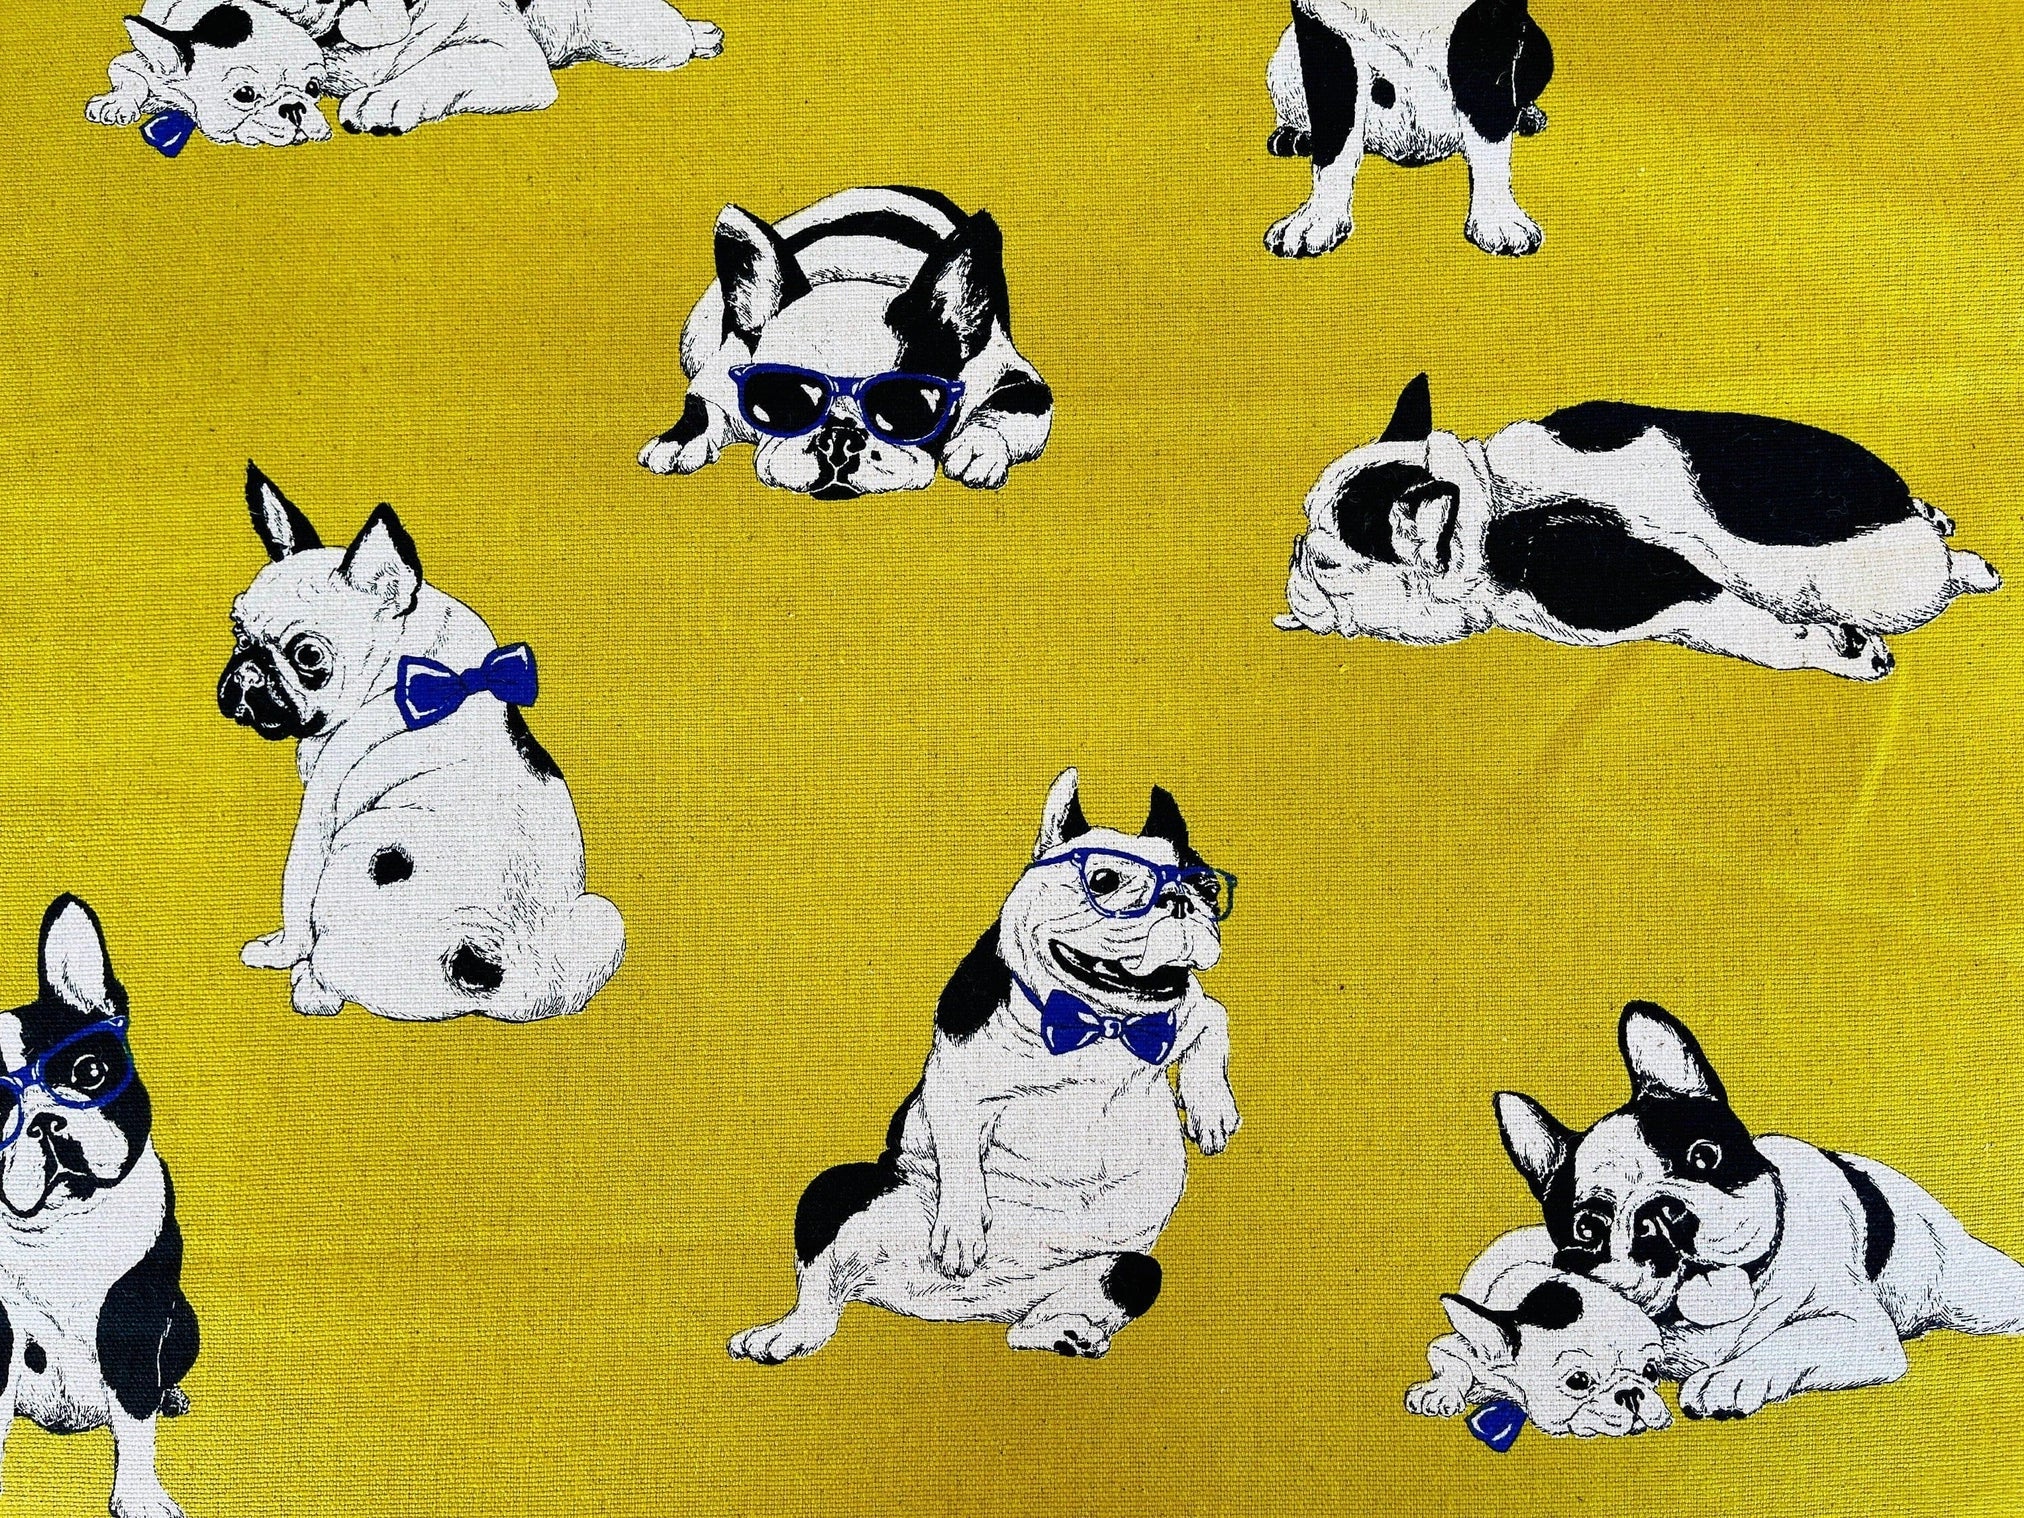 Dog - French Bulldog Fabric - Japanese Linen Cotton Oxford Fabric